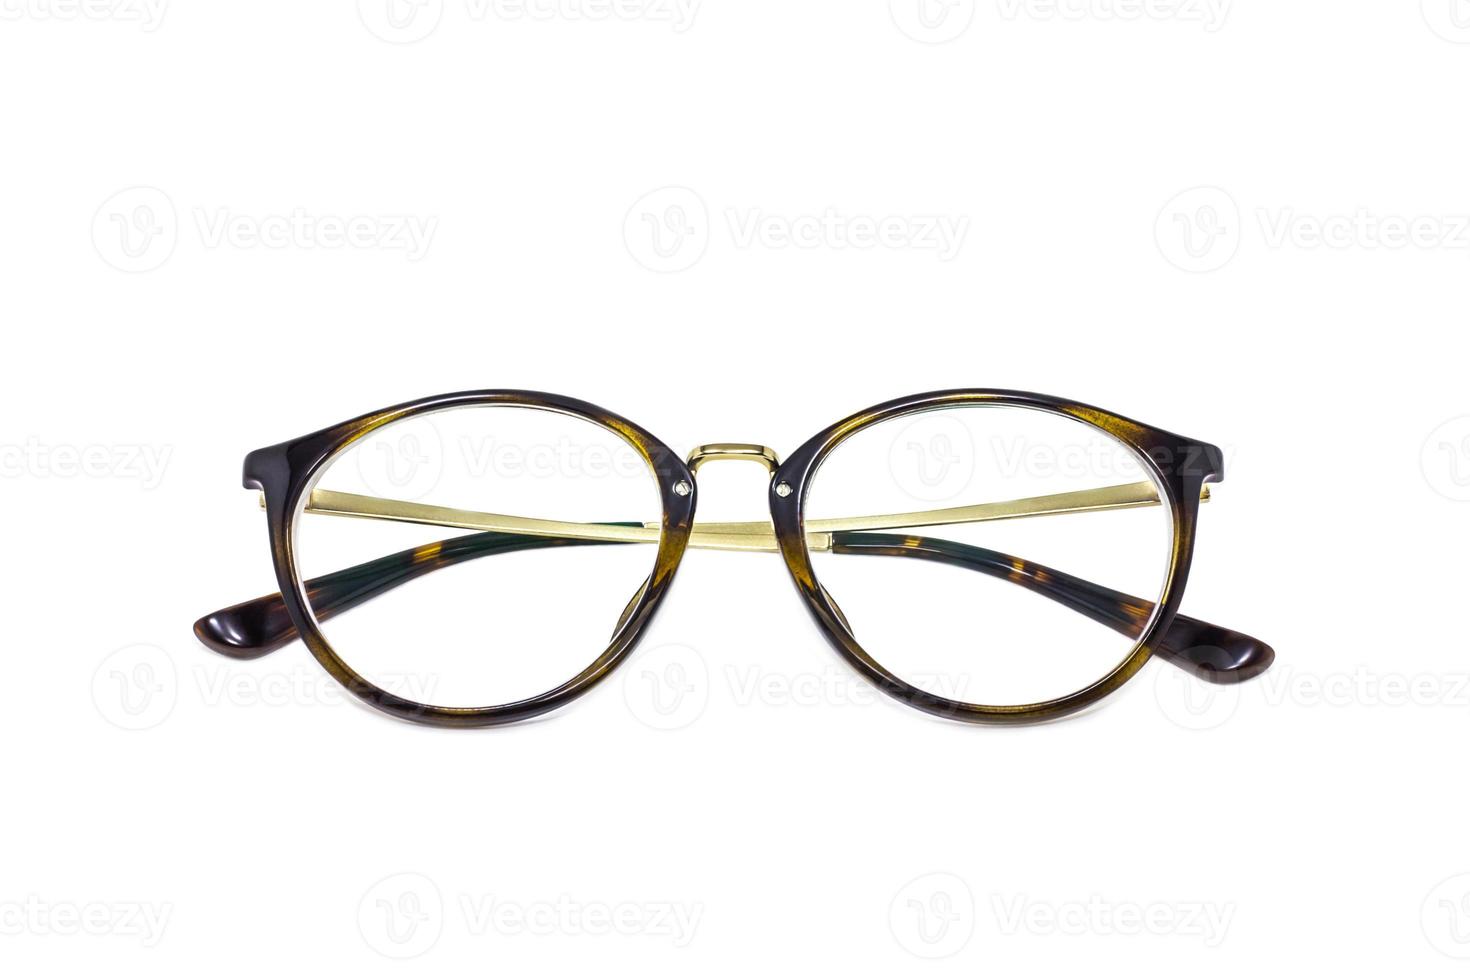 occhiali moda vintage isolati su sfondo bianco foto